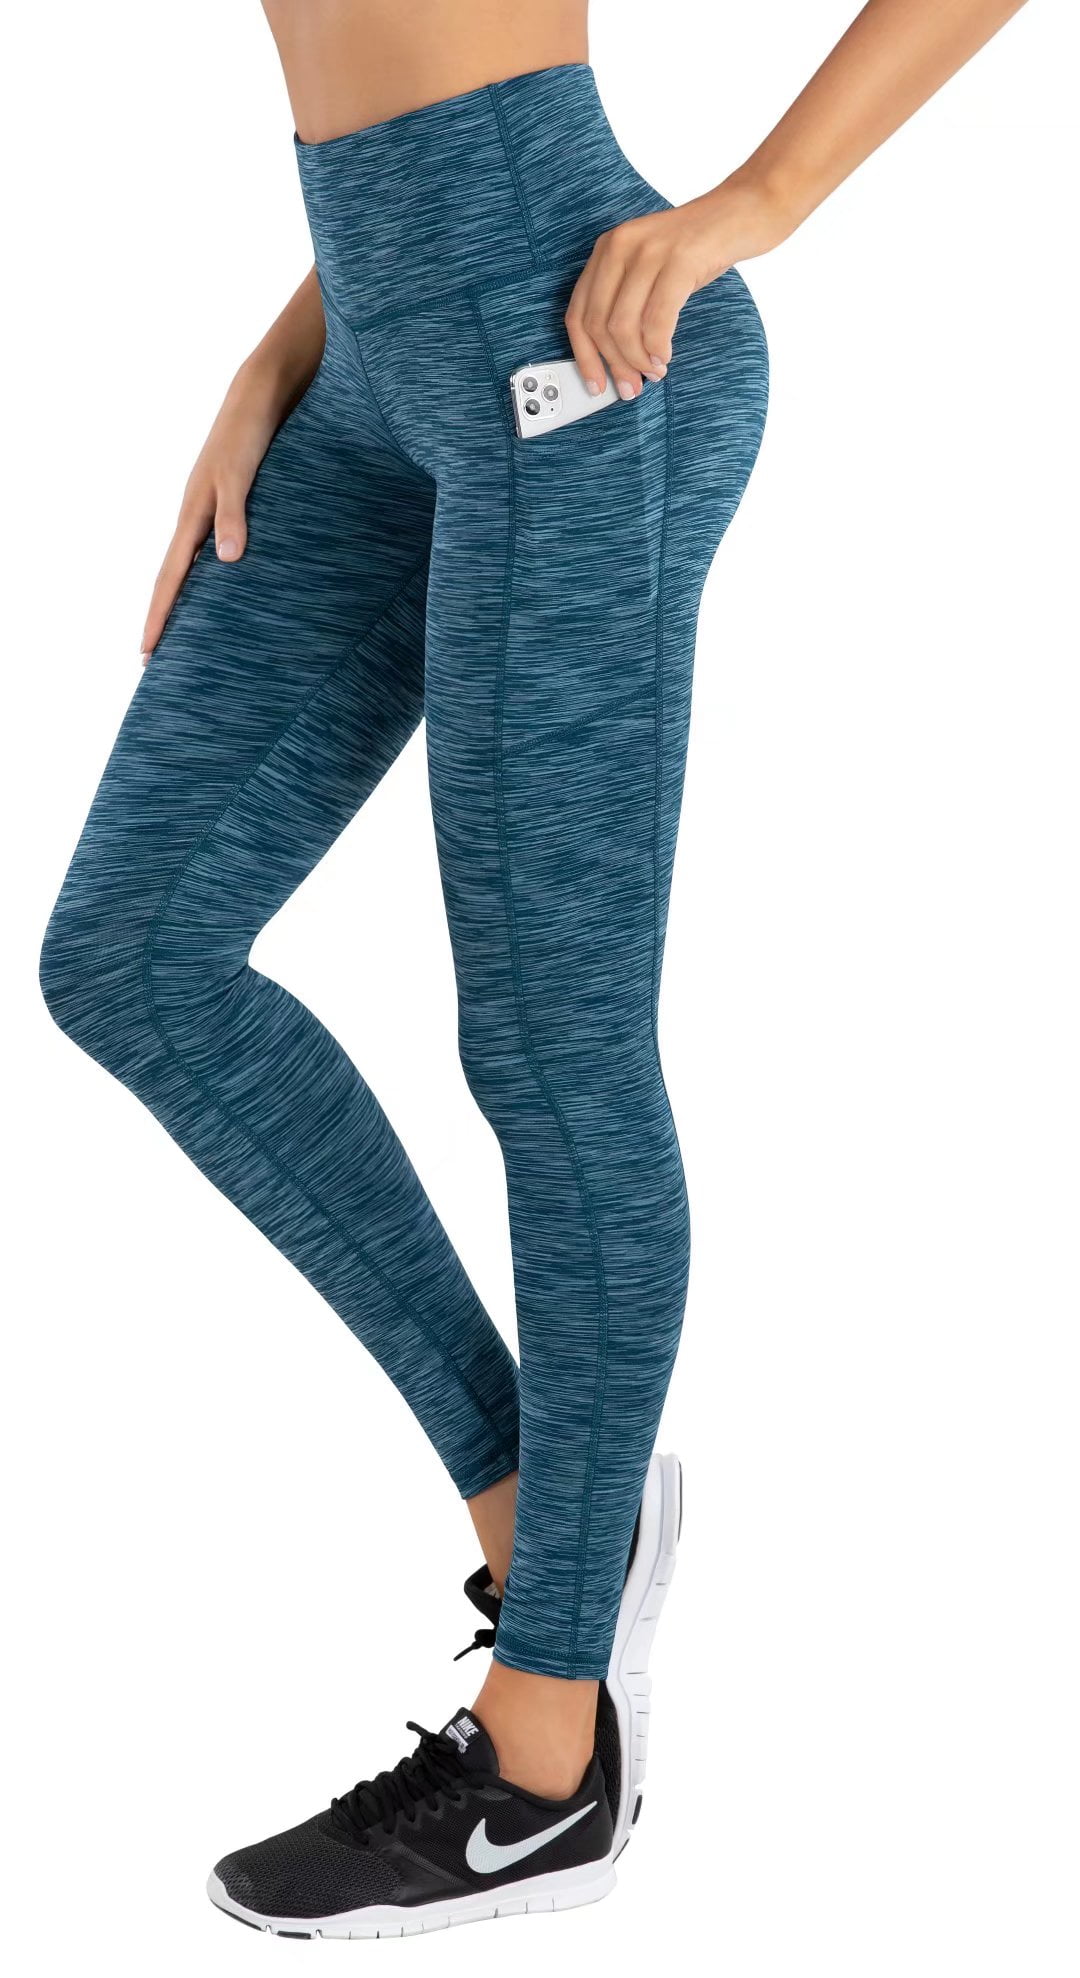 HOFI High Waist Yoga Pants for Women Side & Inner Pockets with Tummy Control Sports Leggings 